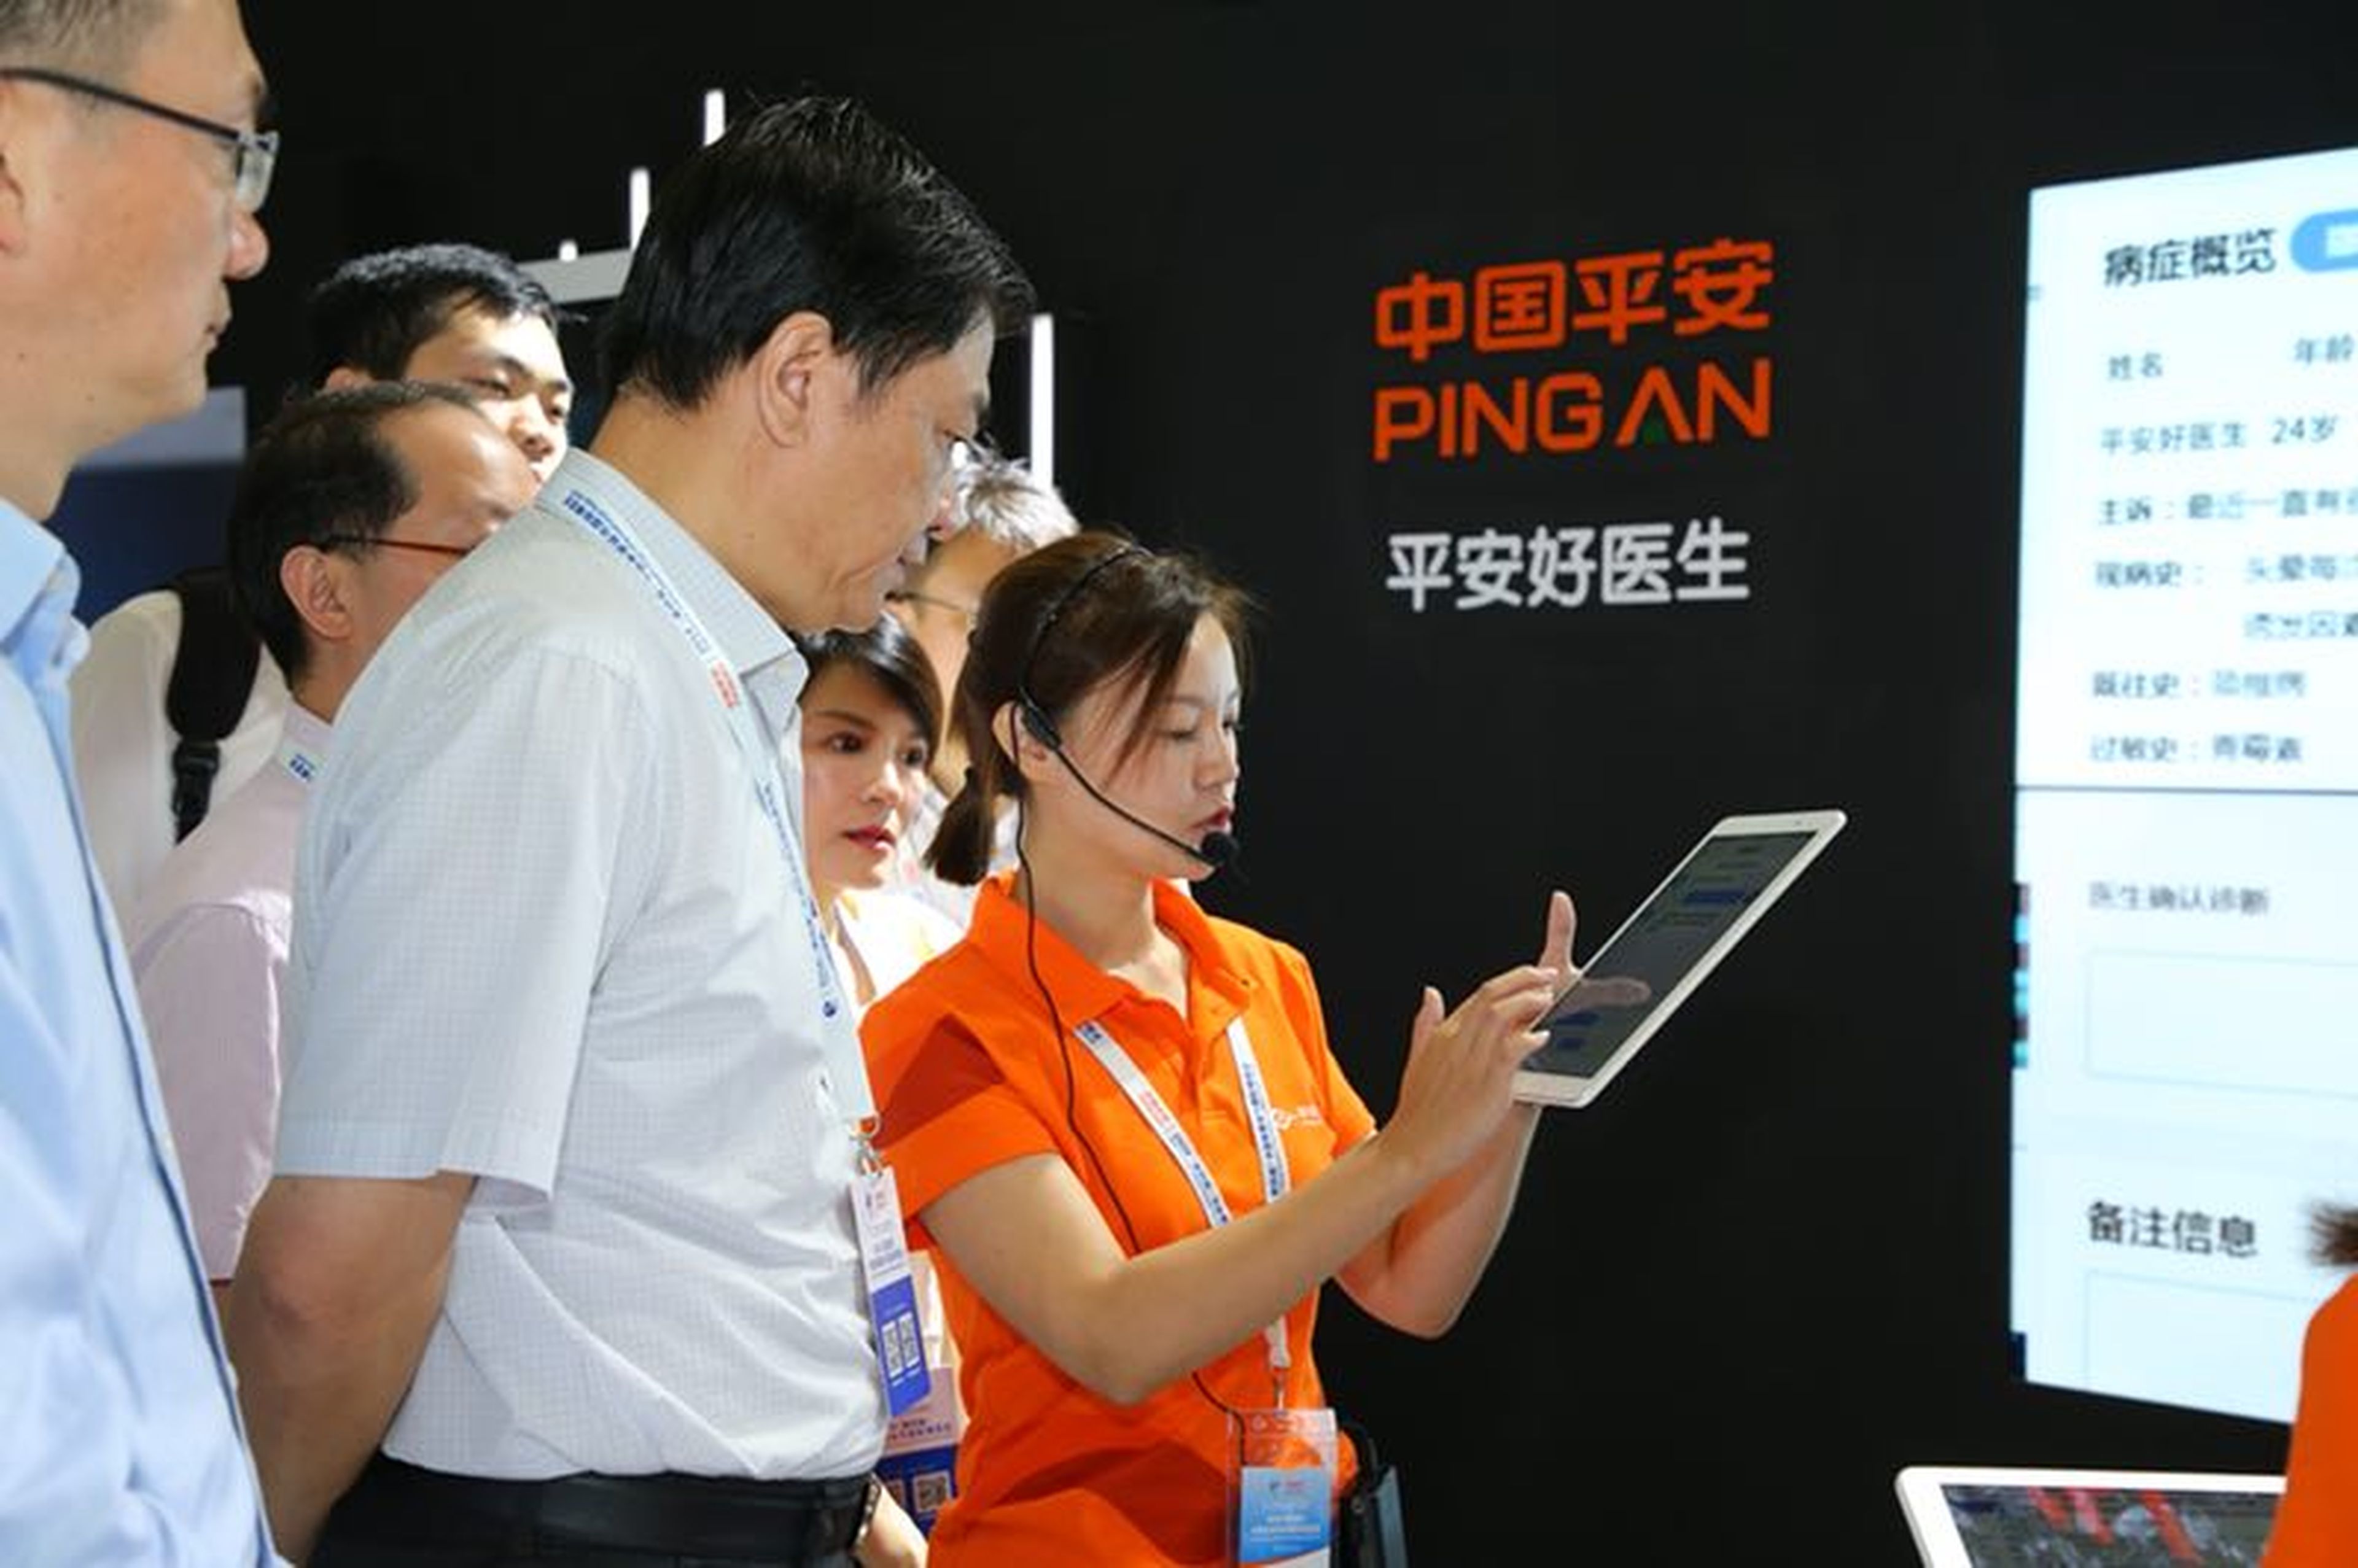 El stand de Ping An Good Doctor en la cuarta China Smart City International Expo, que se celebró en agosto en Shenzhen..